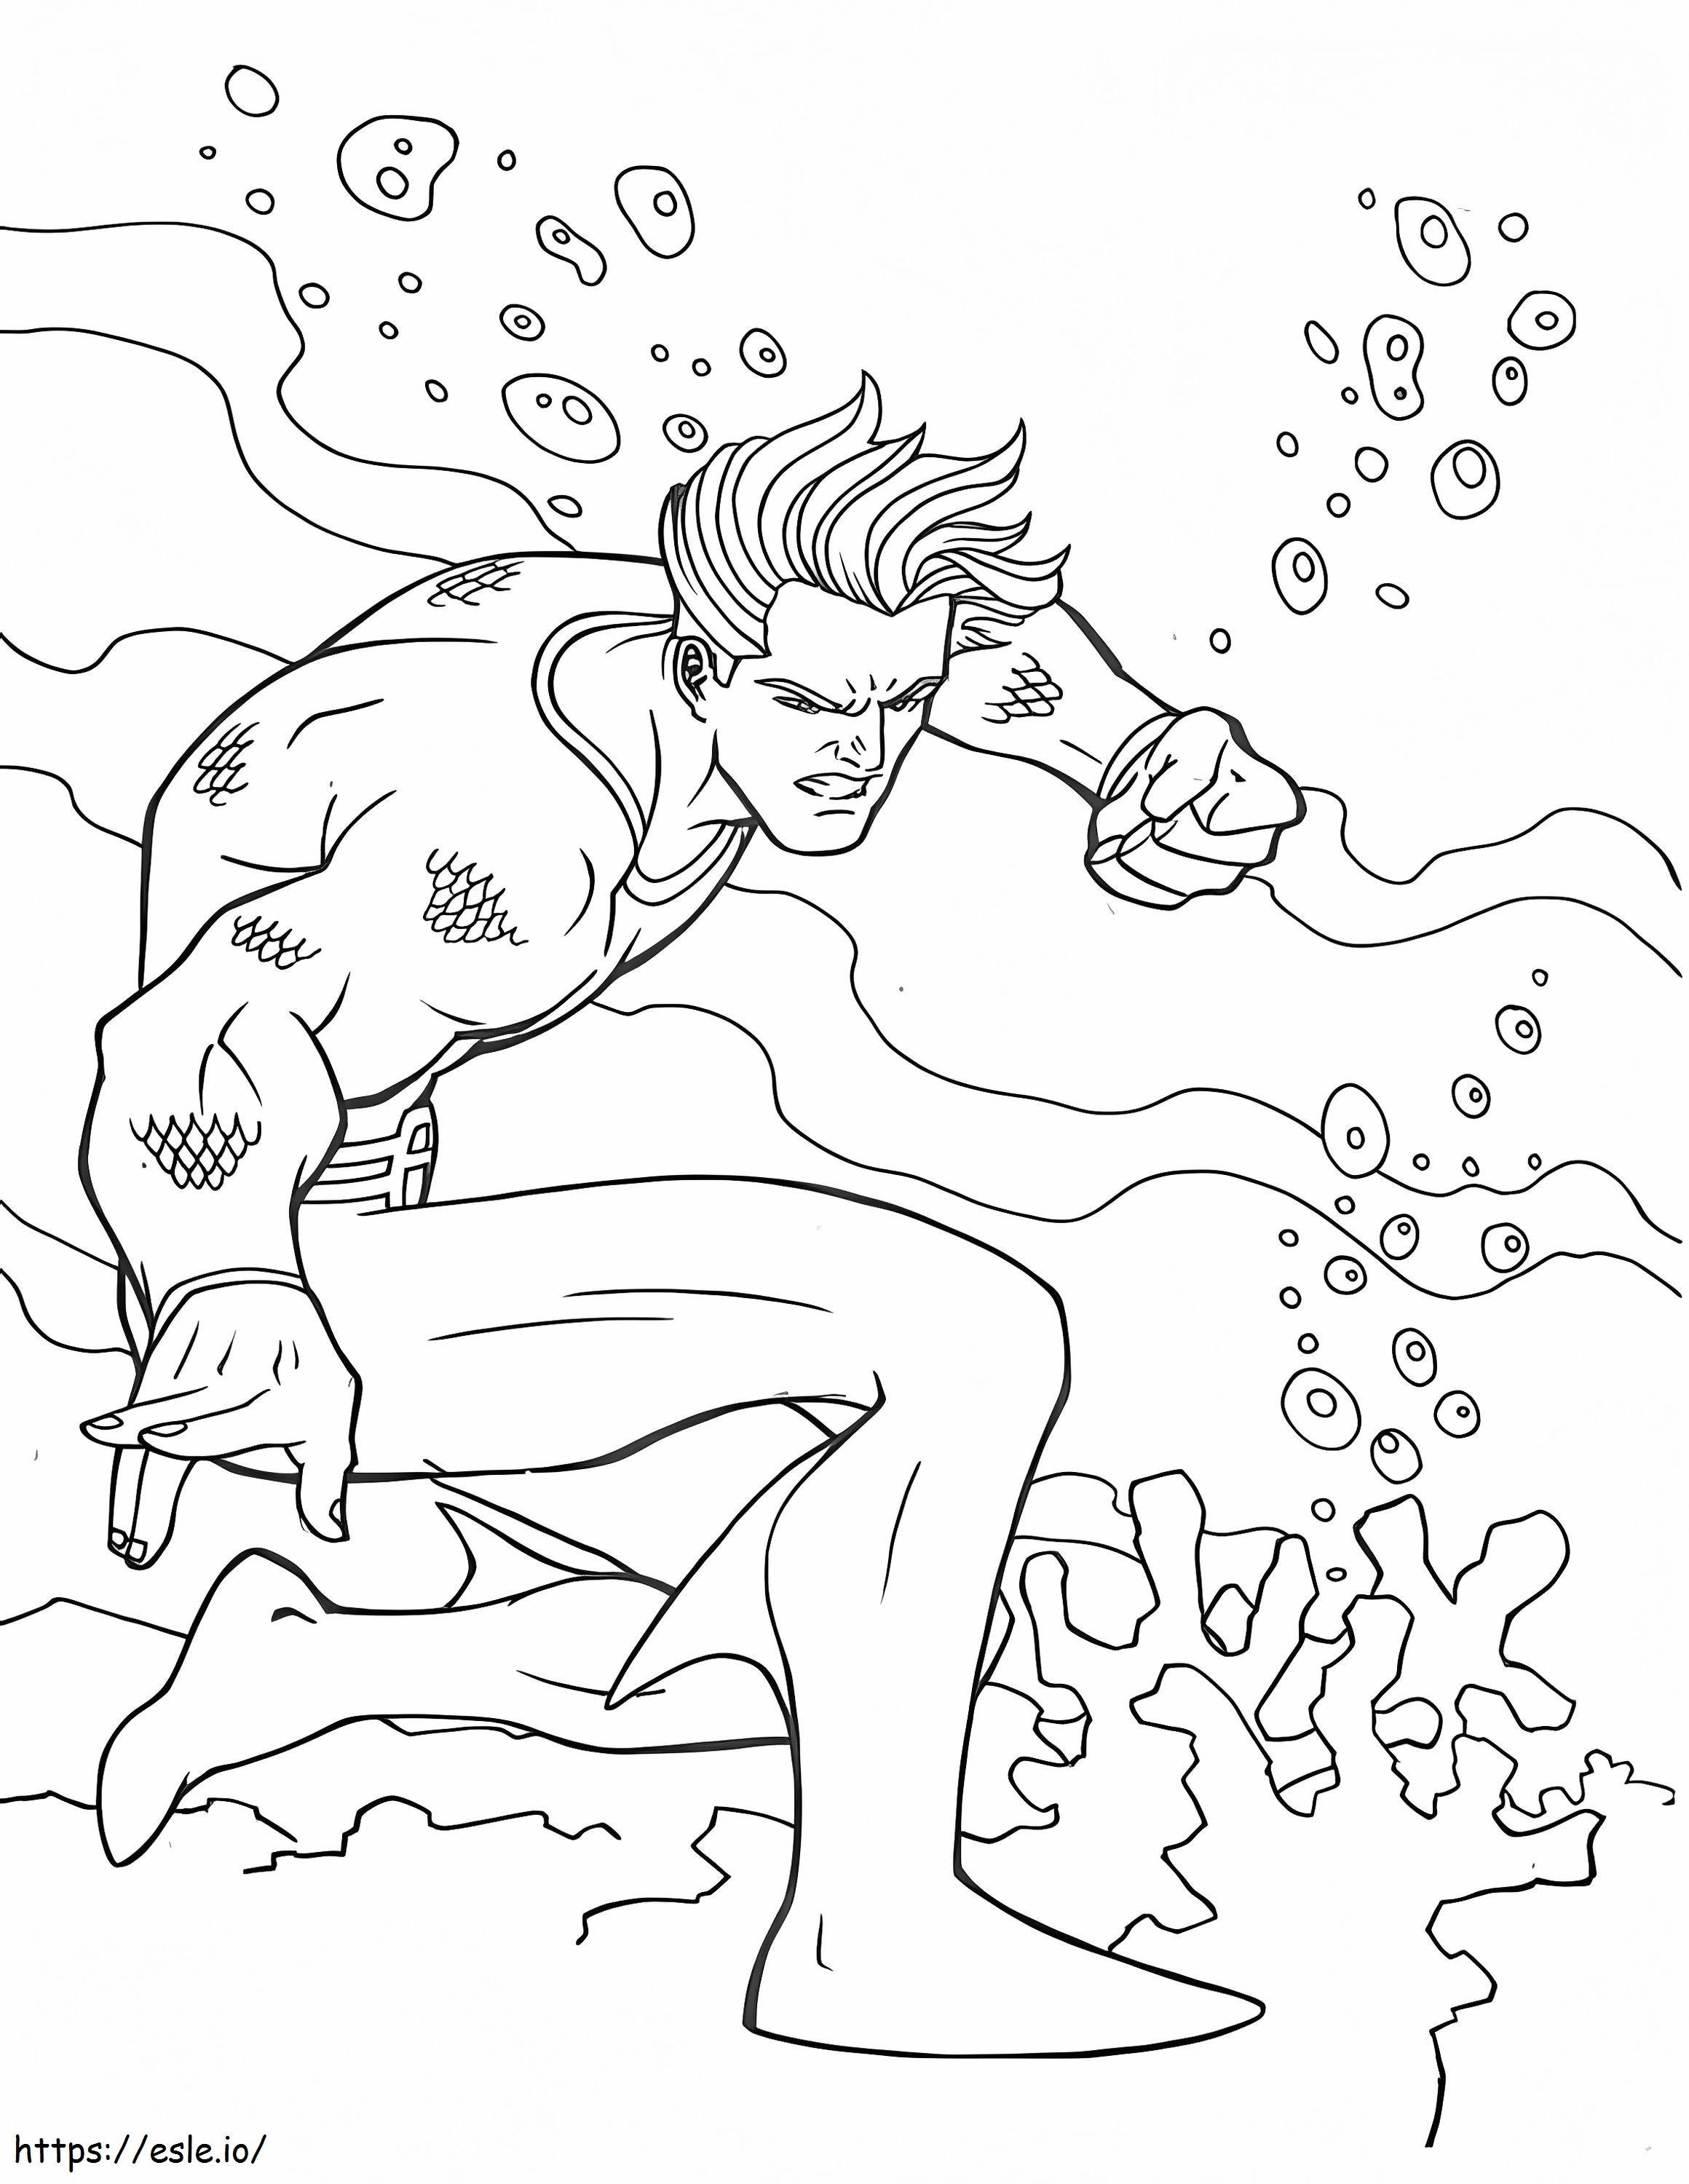 Angry Aquaman Punch coloring page